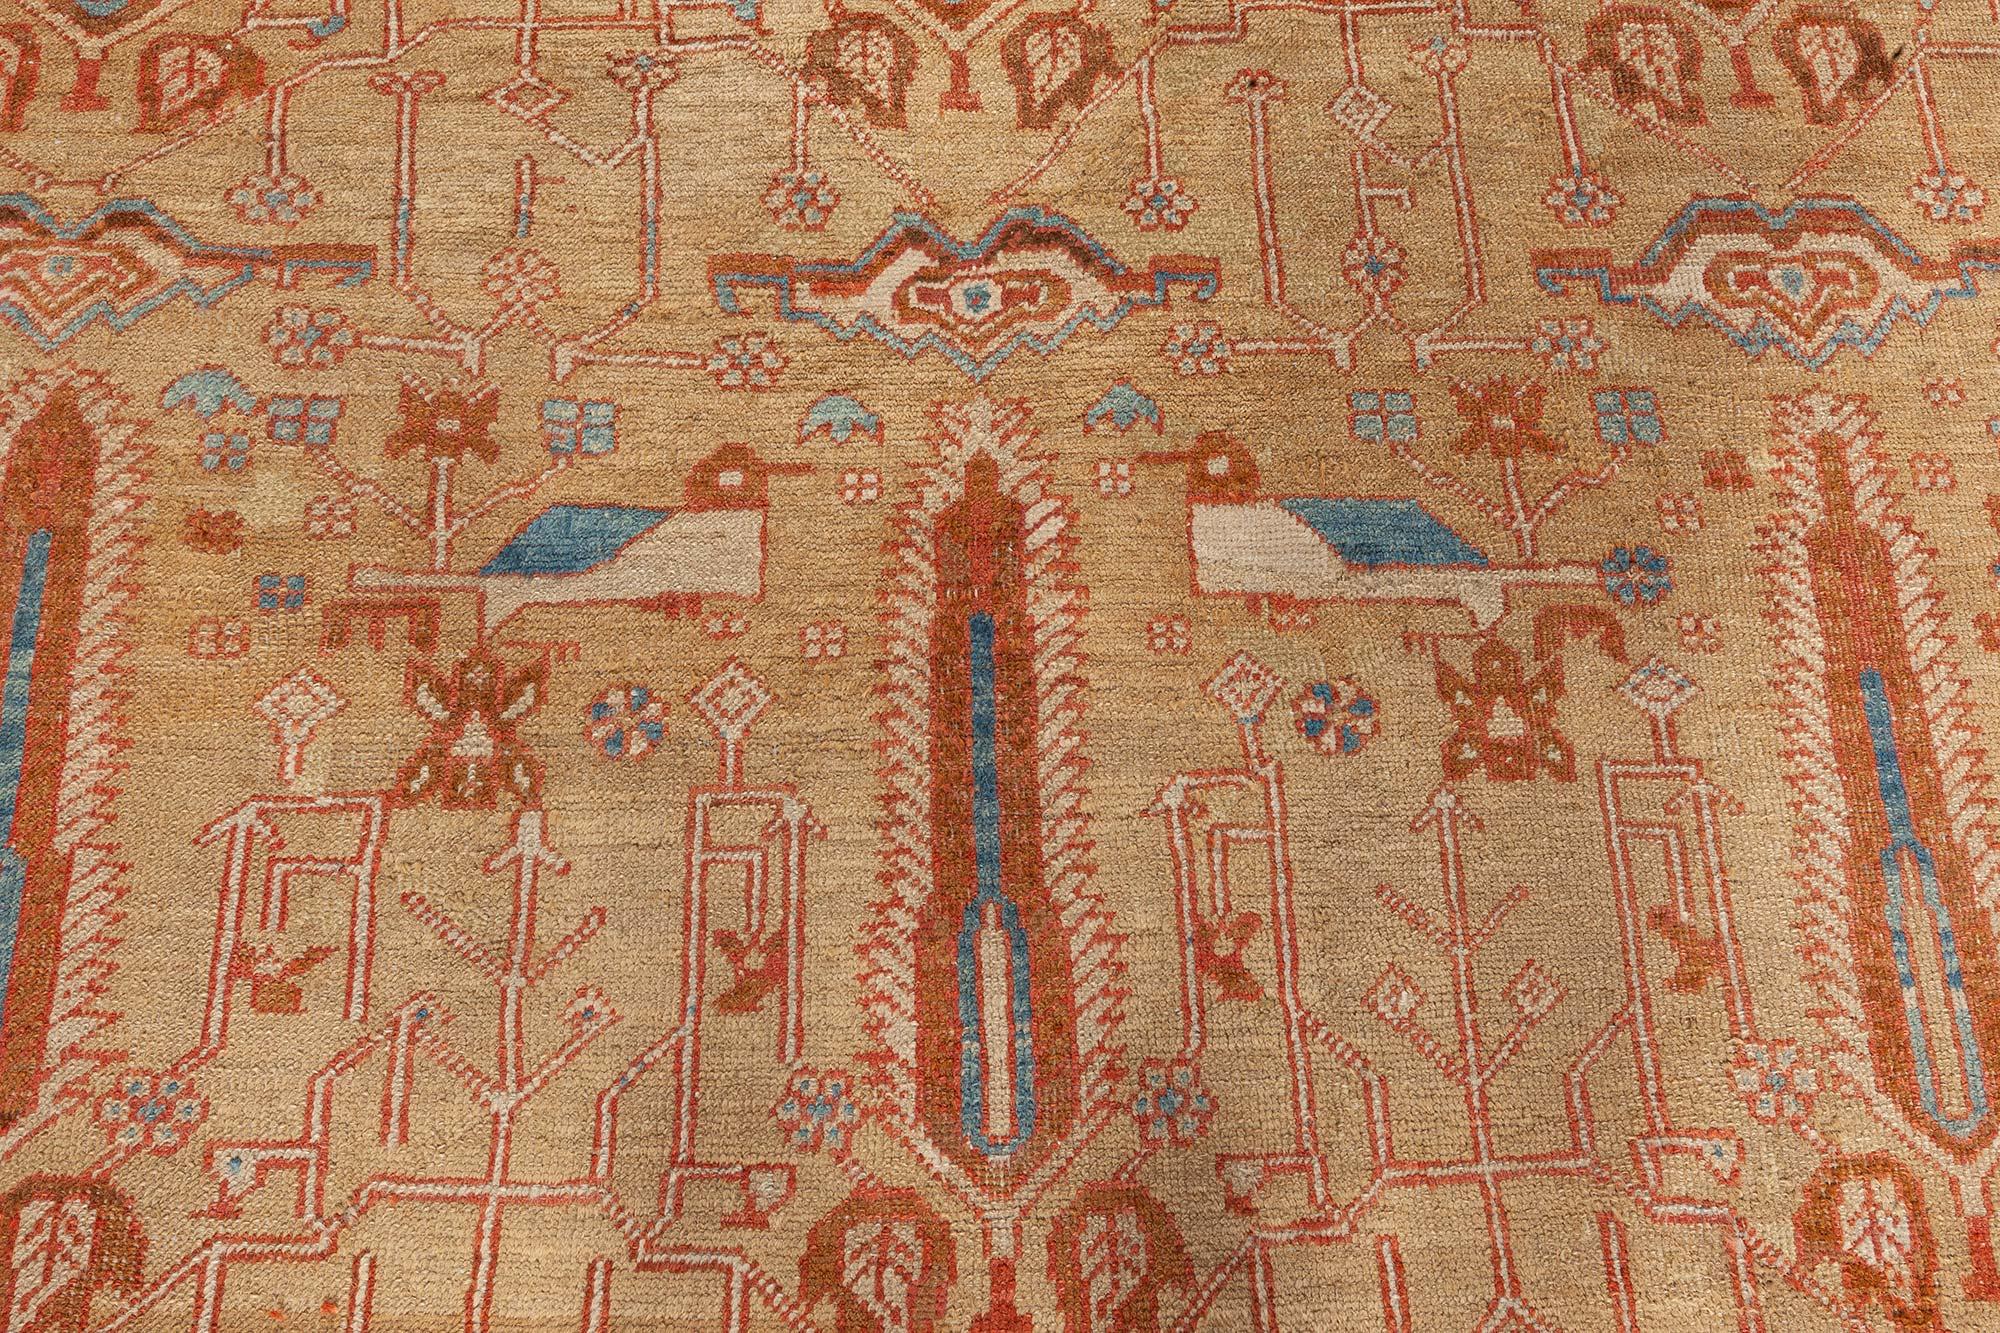 Early 19th Century Primitive Bakshaish carpet
Size: 10'0